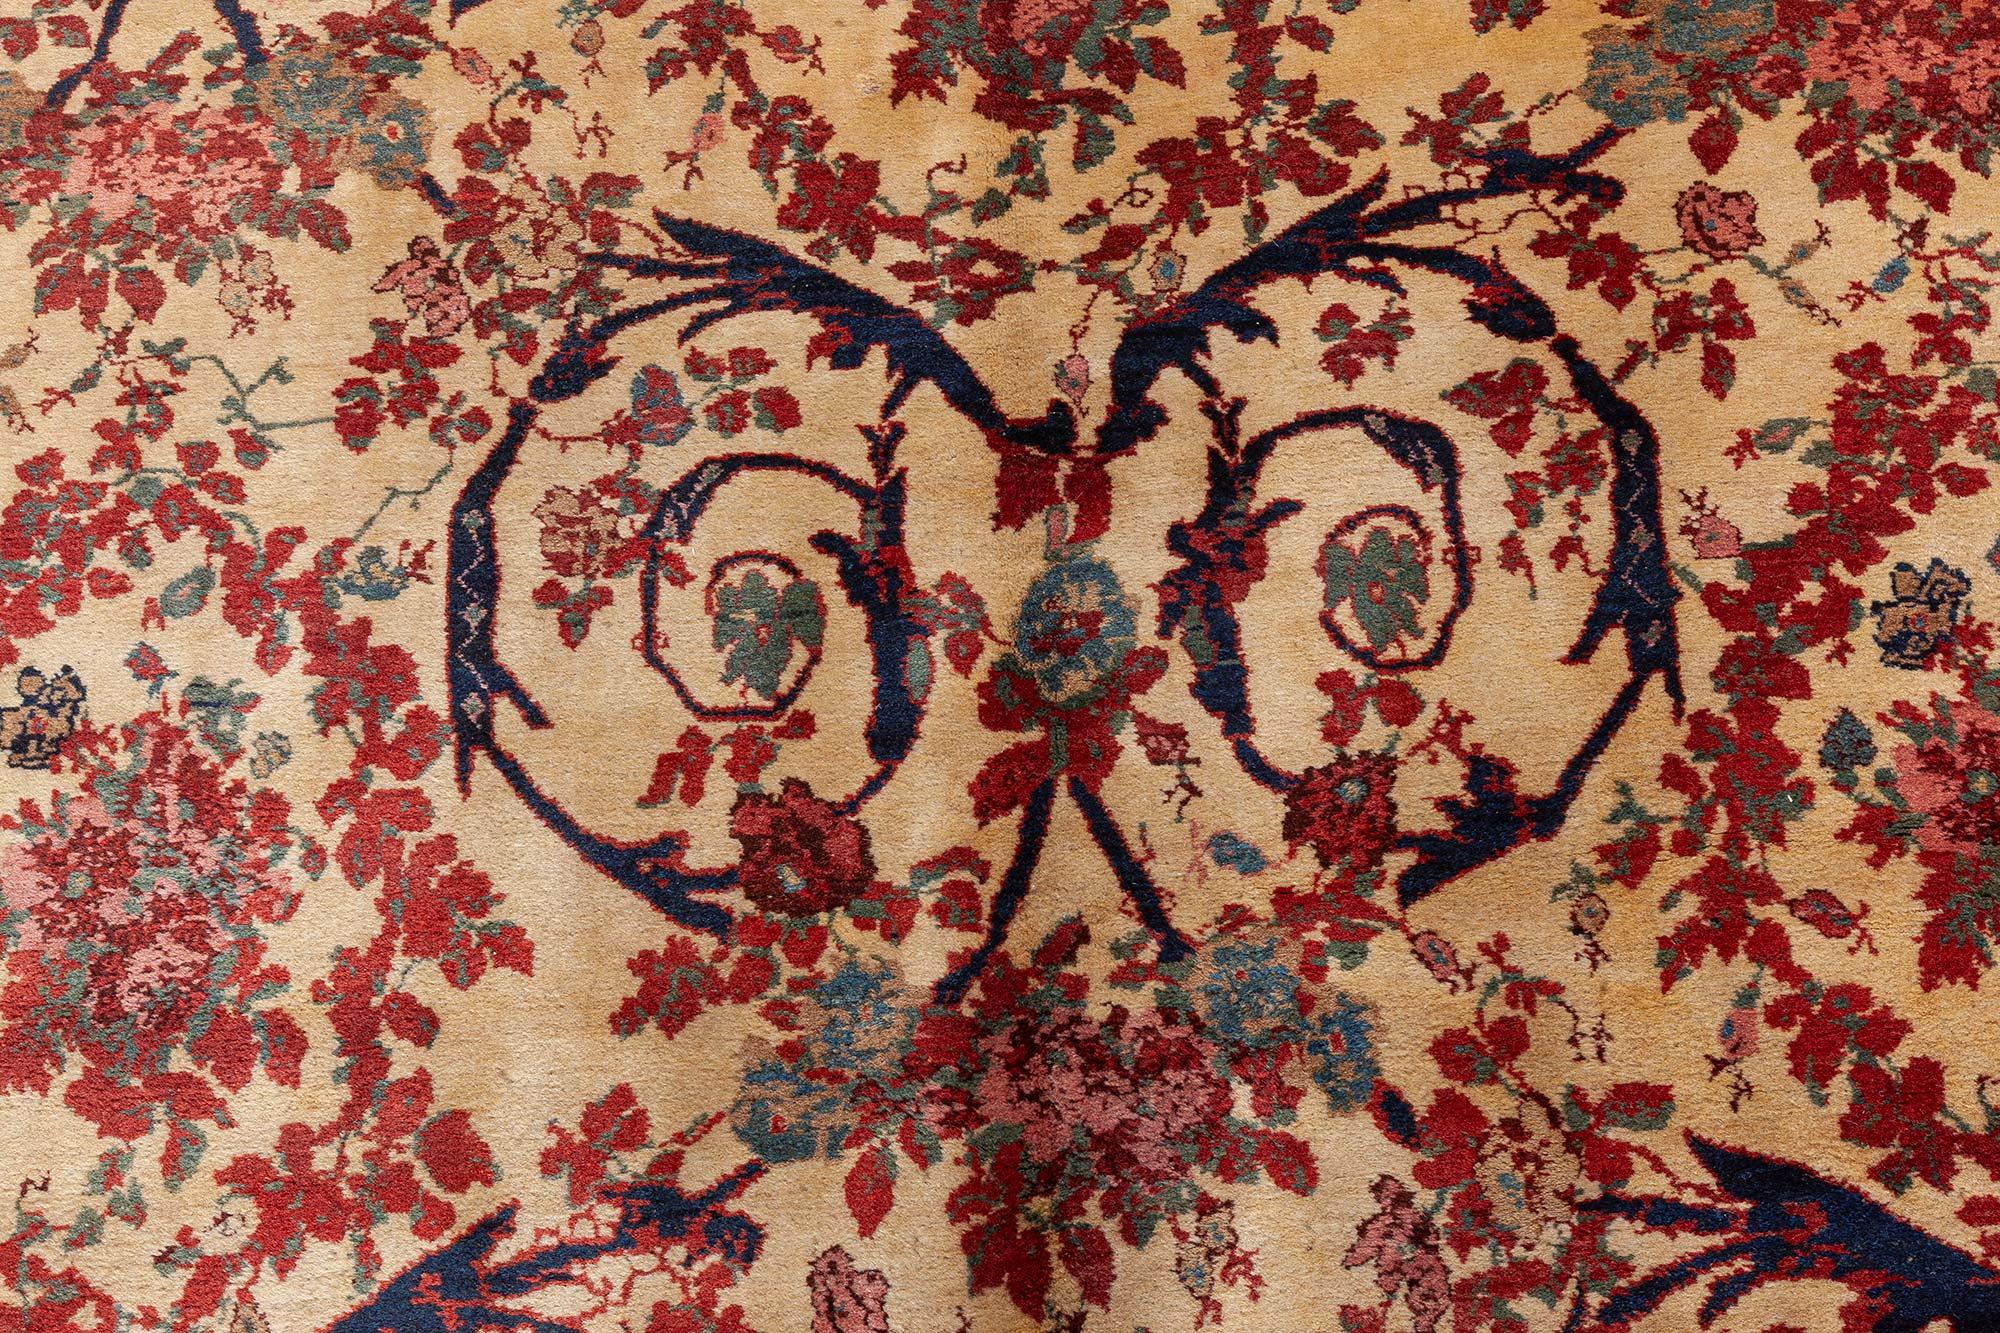 Authentic 19th Century Persian Bidjar Handmade Wool Carpet
Size: 12'9